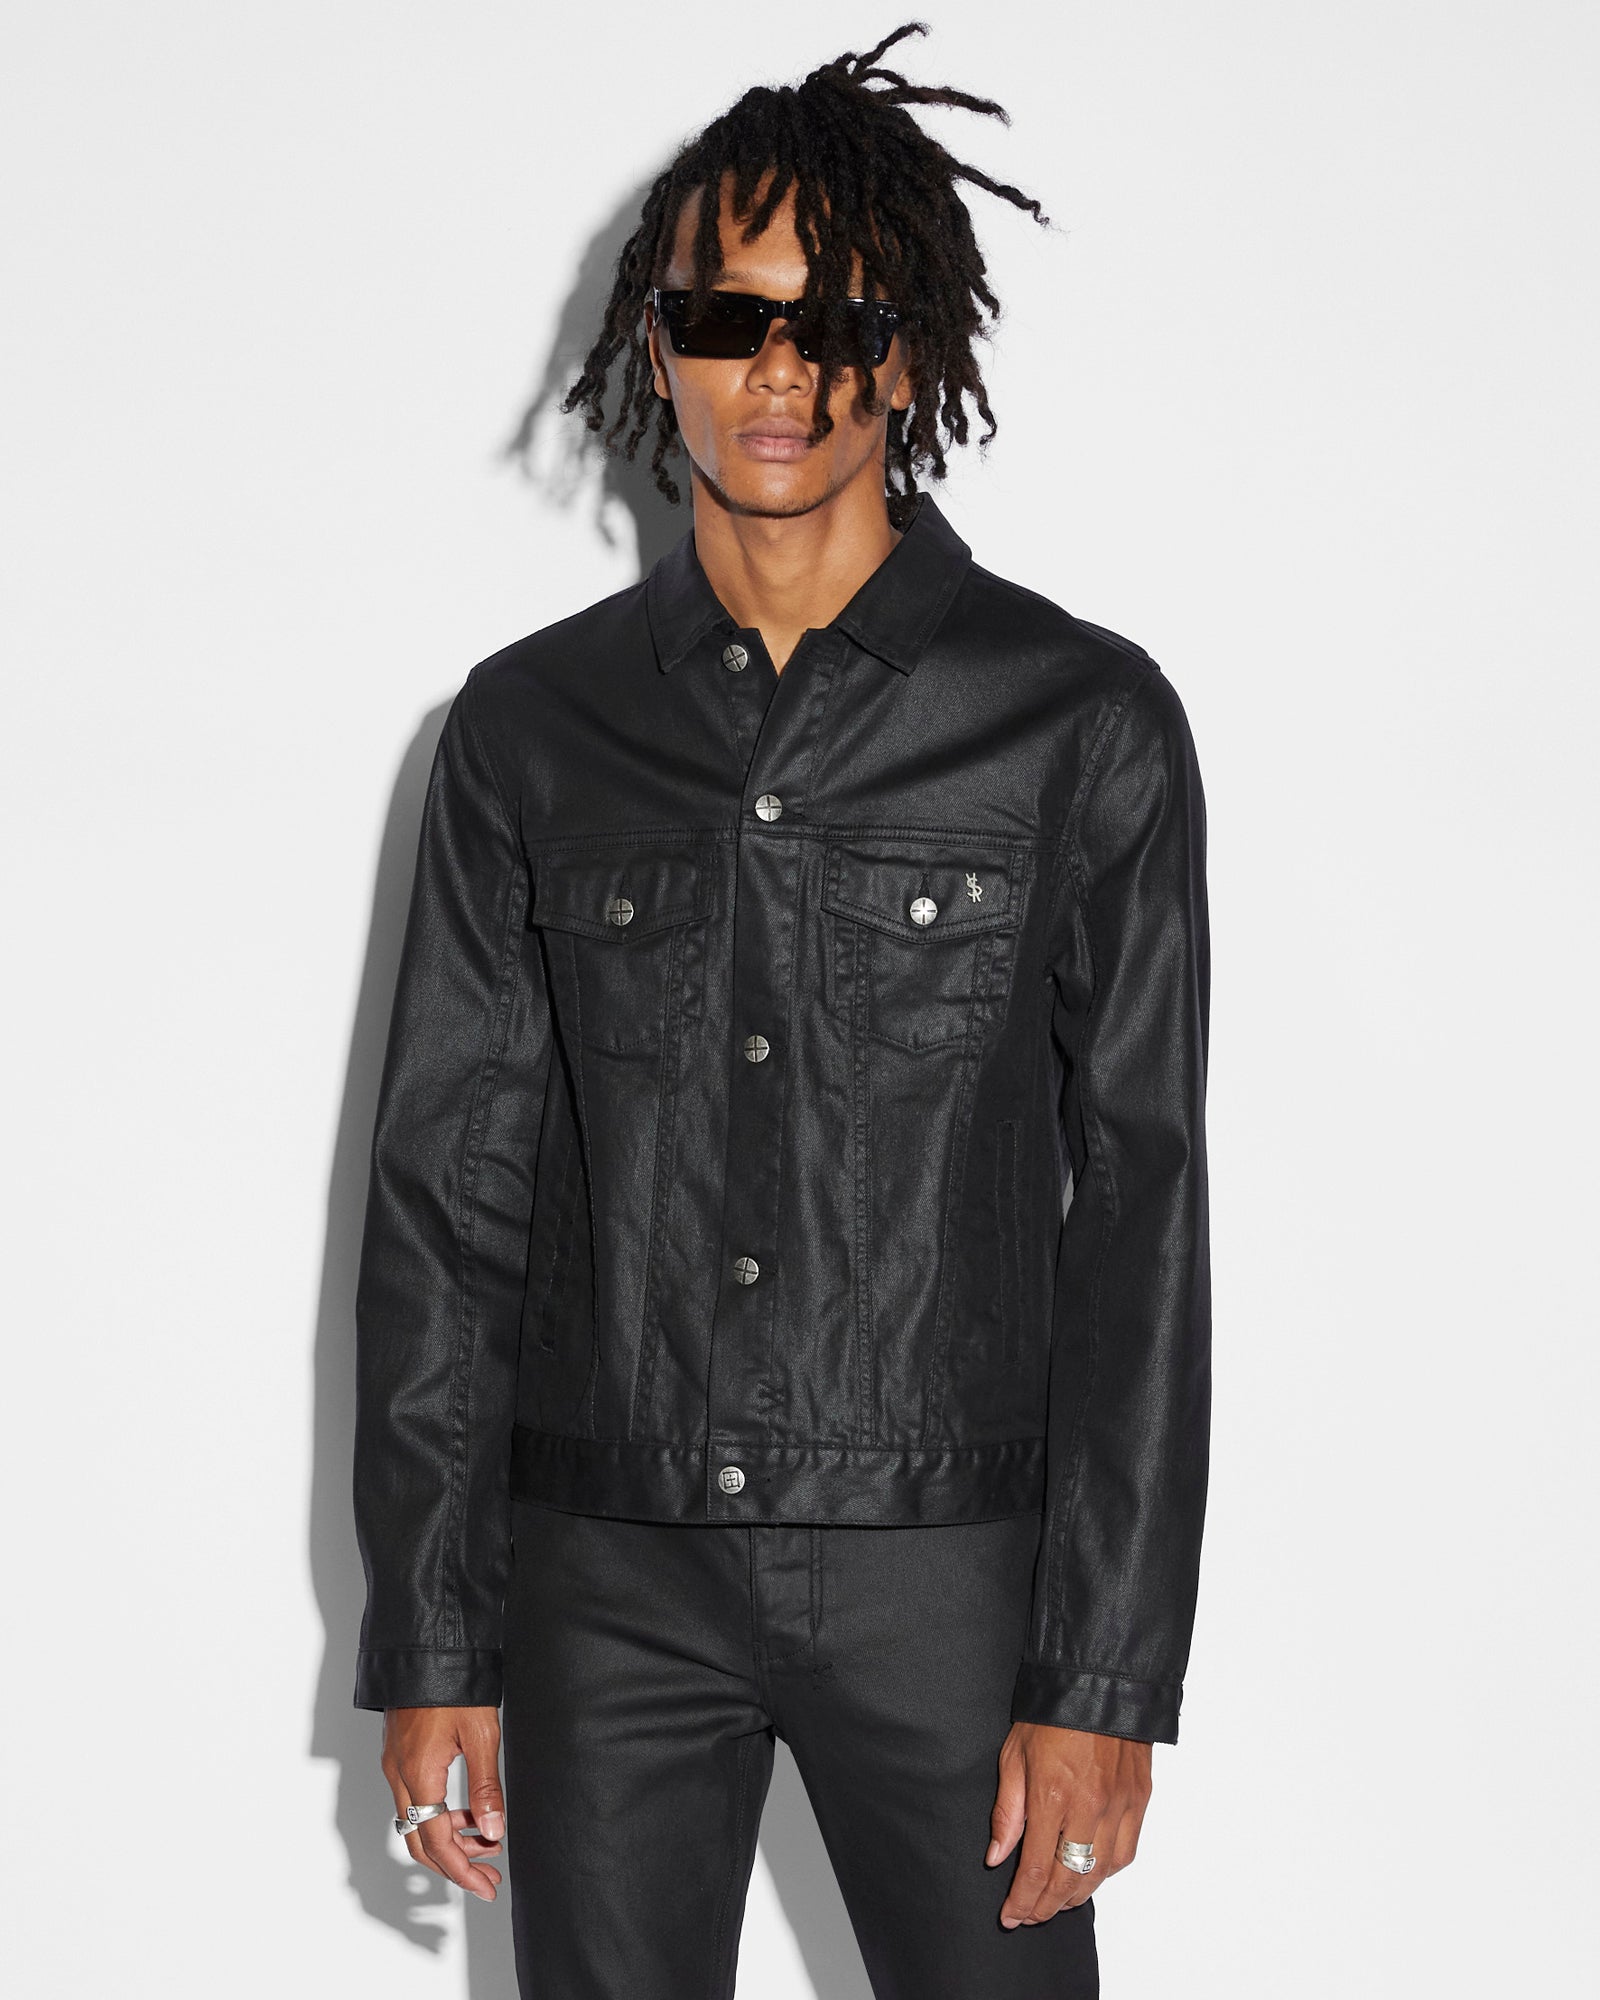 Shop Men's Jackets | Leather Jackets, Coats & More | Ksubi | Ksubi ++